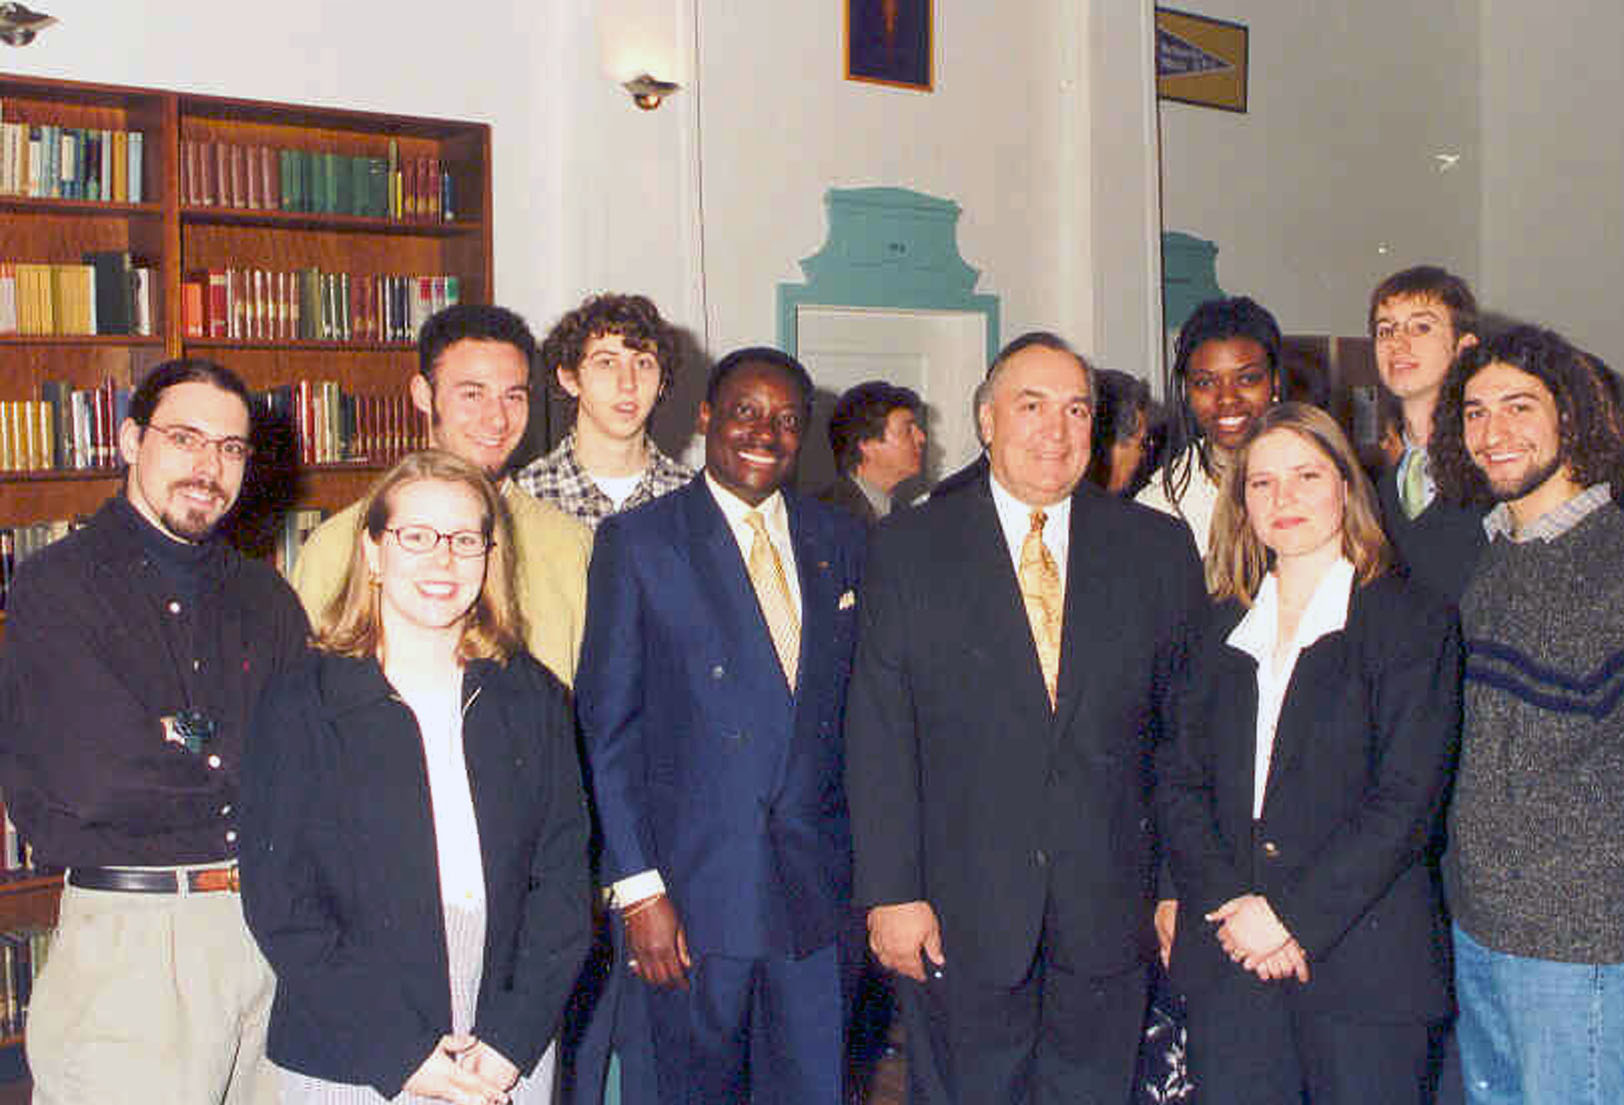 Michigan Governor John Engler (R) and Wayne State University President Irvin D. Reid visit JYM in 1999